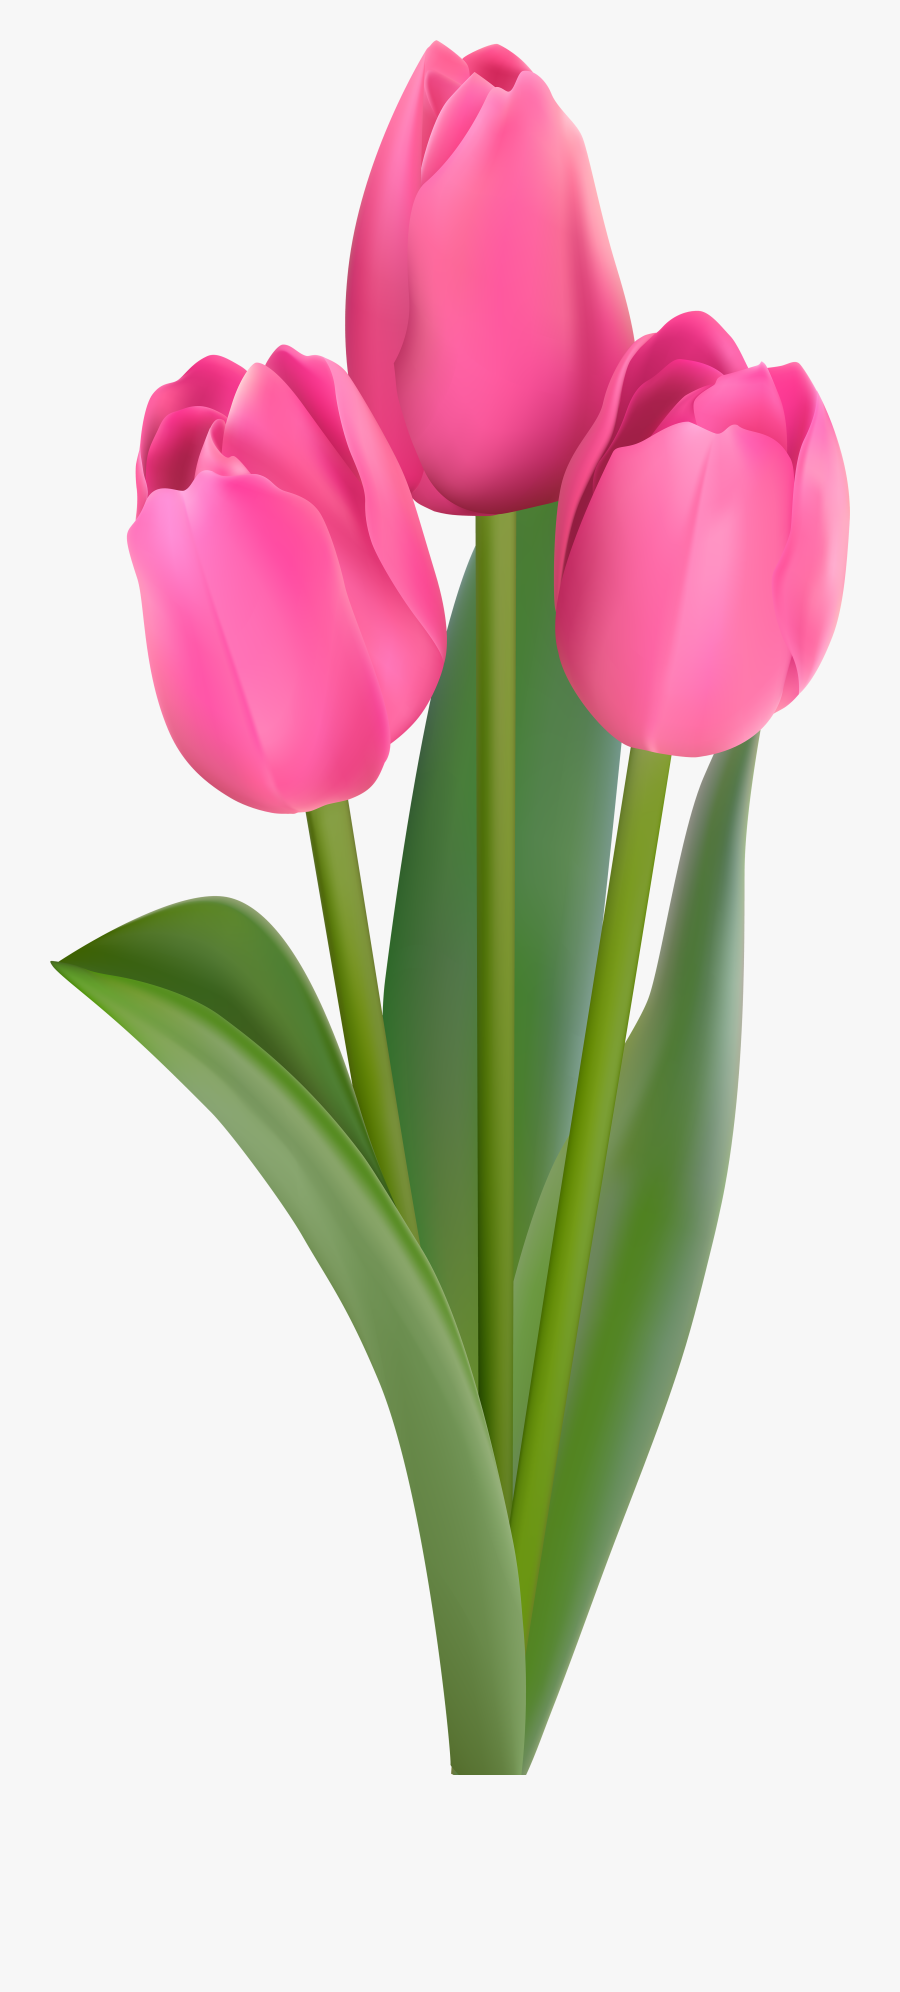 Pink Tulips Transparent Clip Art - Pink Tulips Flowers Clipart, Transparent Clipart